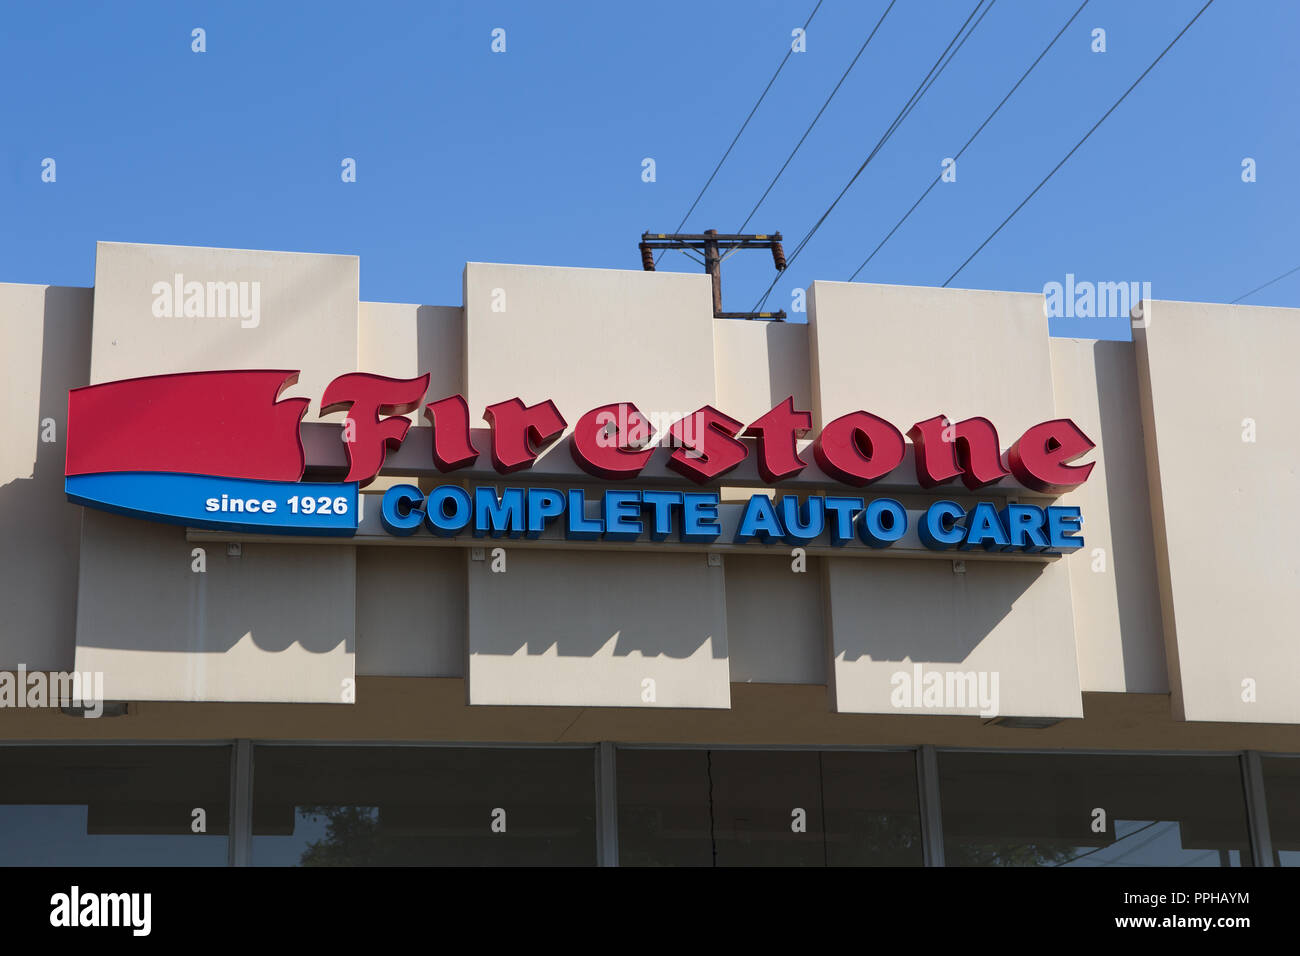 Firestone complete auto care center sign on exterior of building in Orange California USA Stock Photo